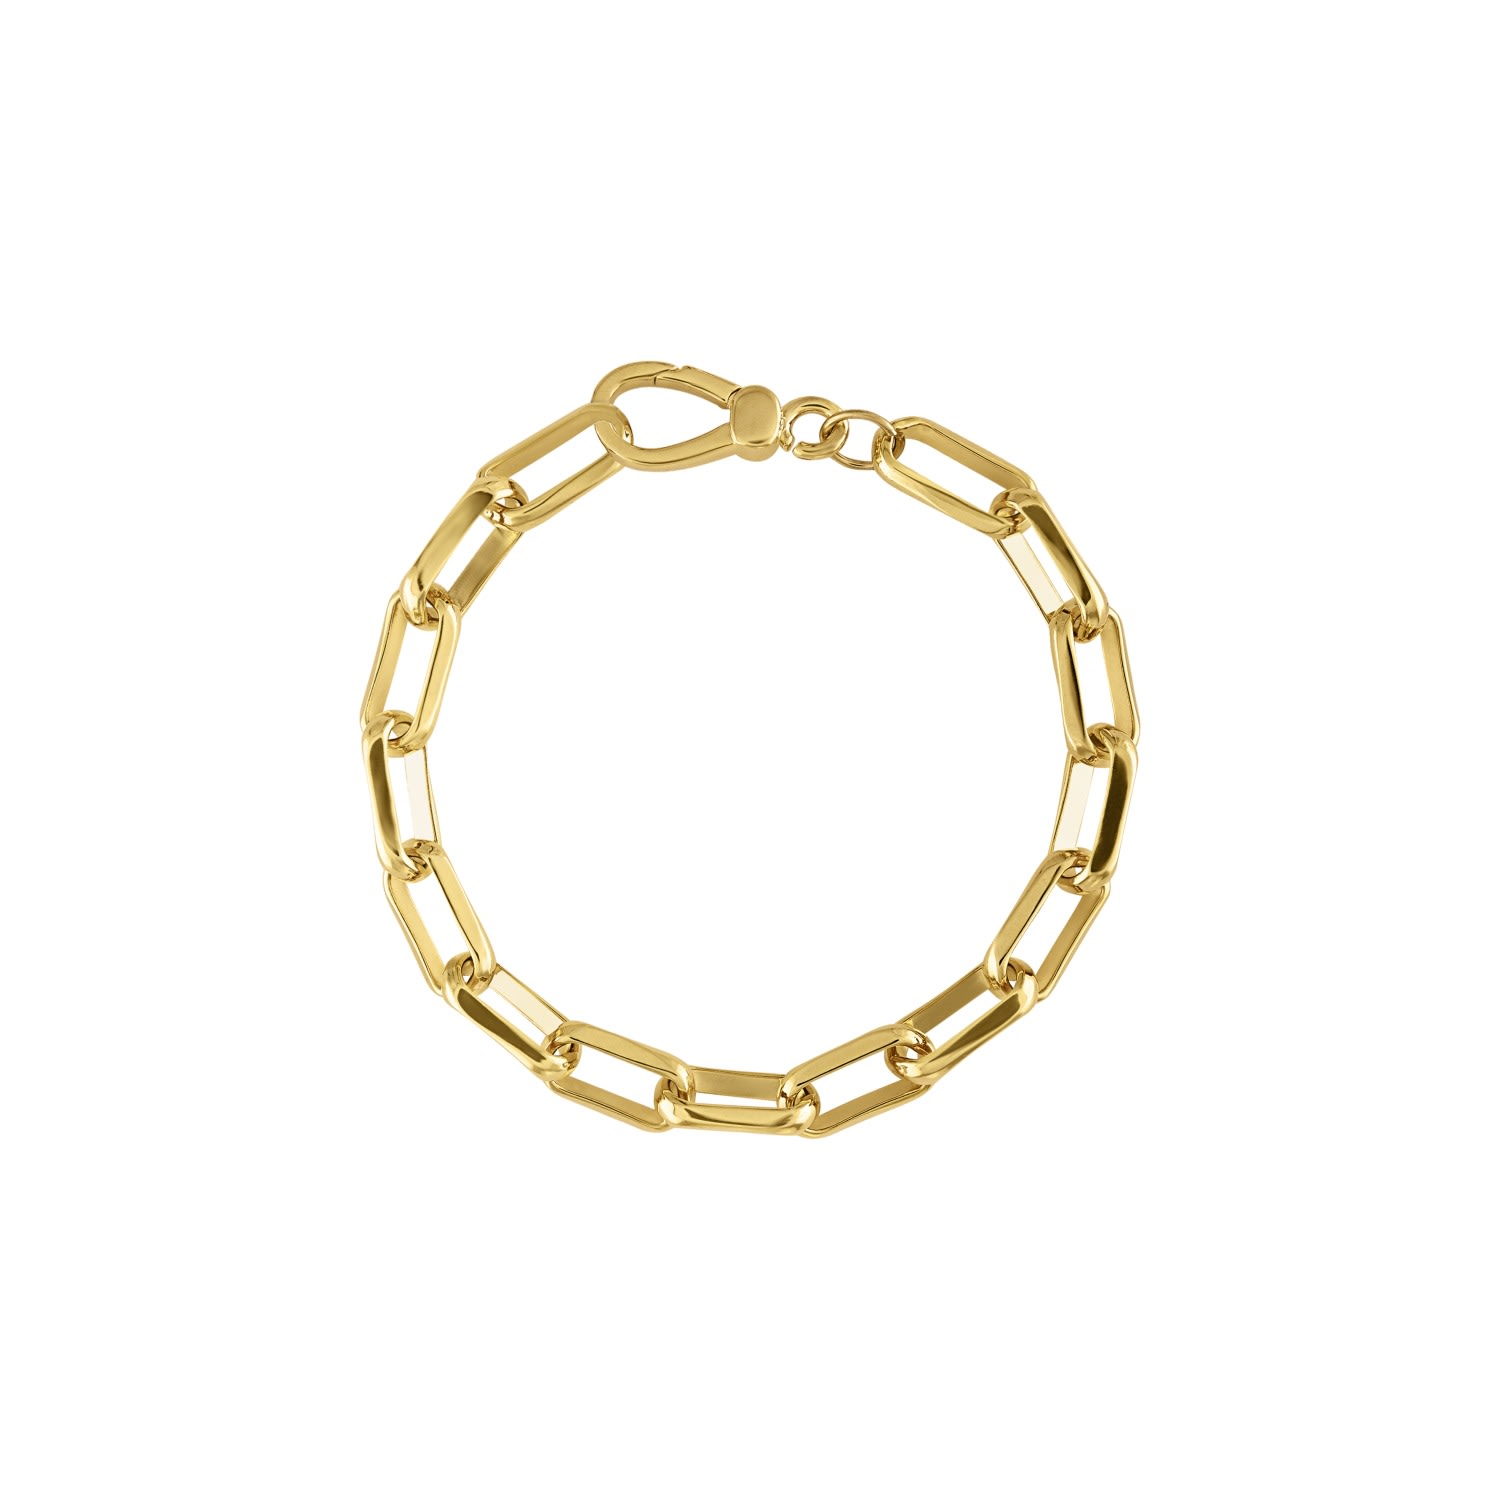 Olivia Le Women's Linked Up Gold Chain Bracelet